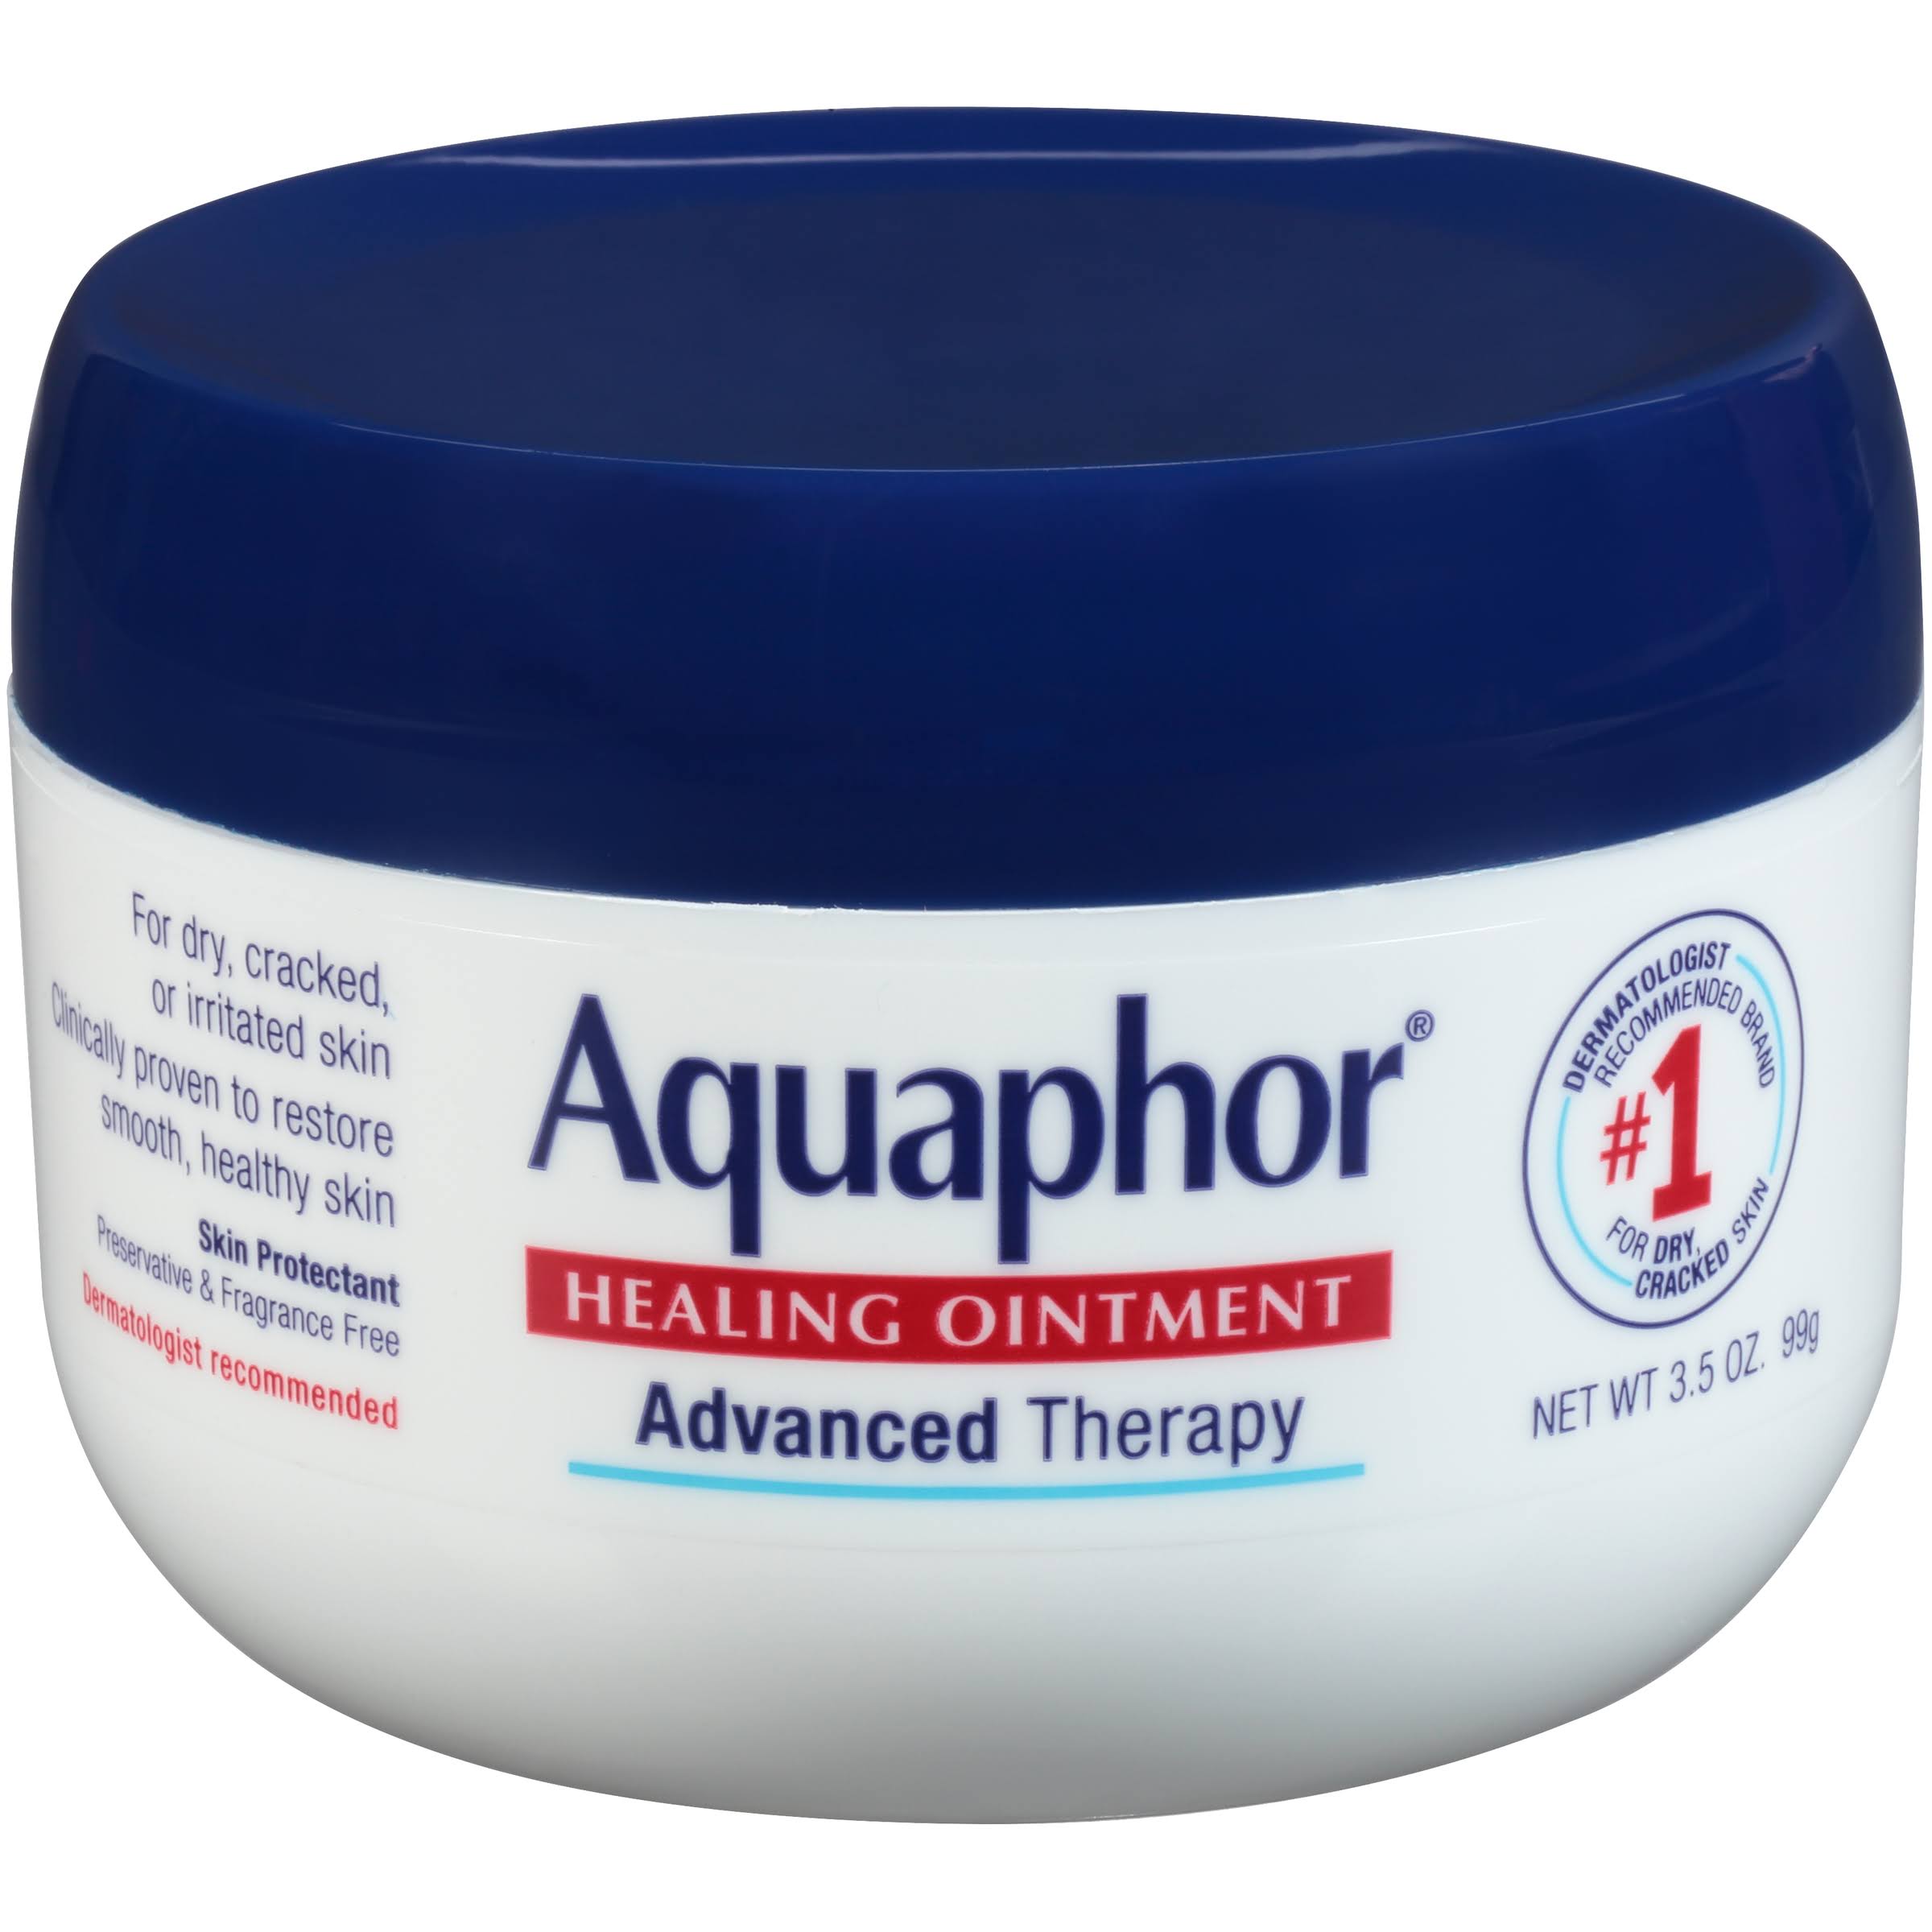 Aquaphor Advanced Therapy Healing Ointment - 3.5oz